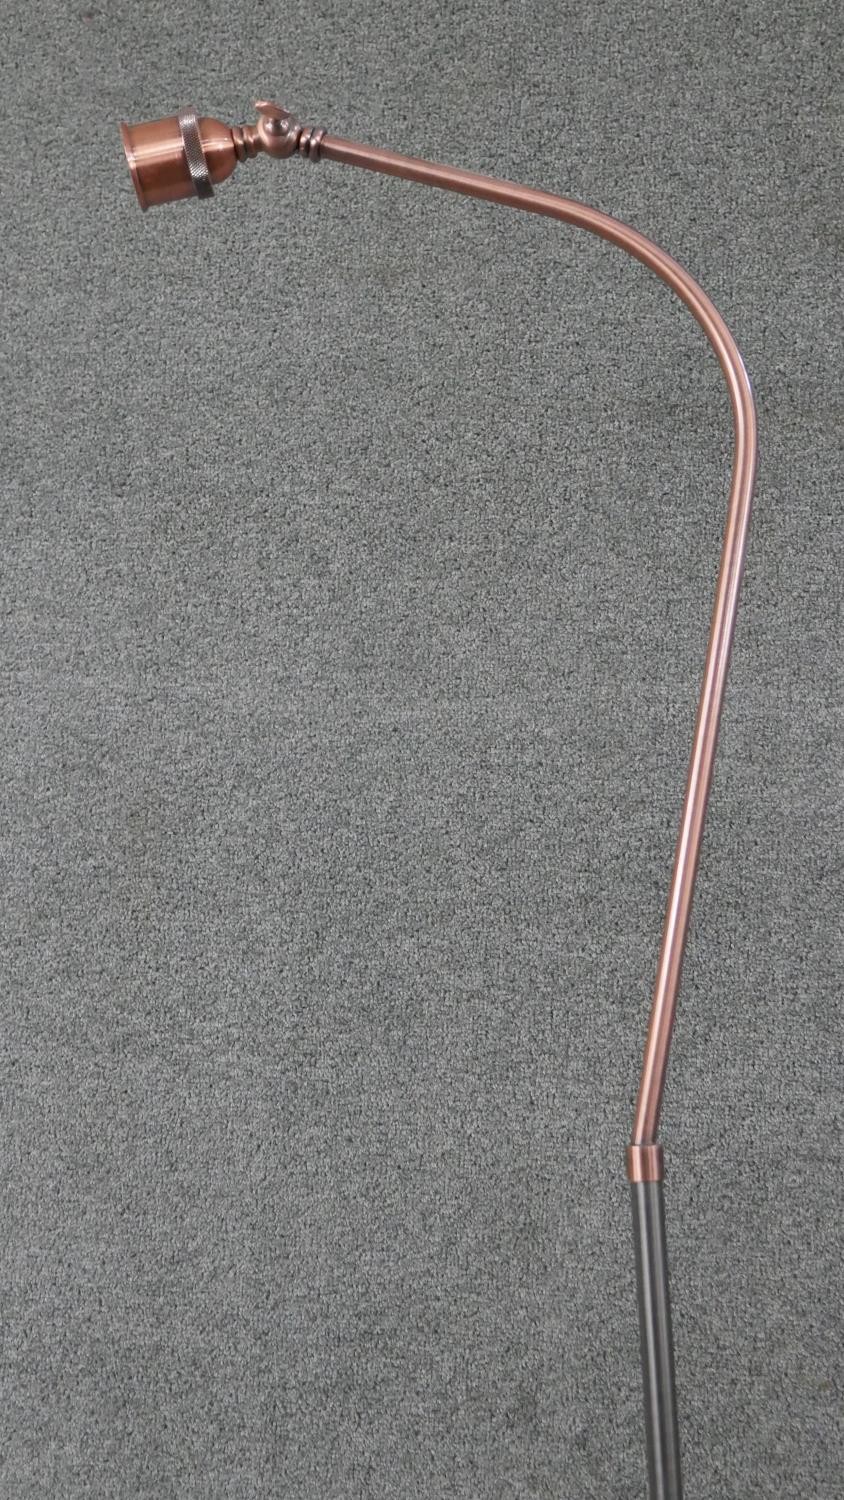 A John Lewis & Partners Baldwin floor lamp in copper. (no shade) H.153cm - Image 3 of 4